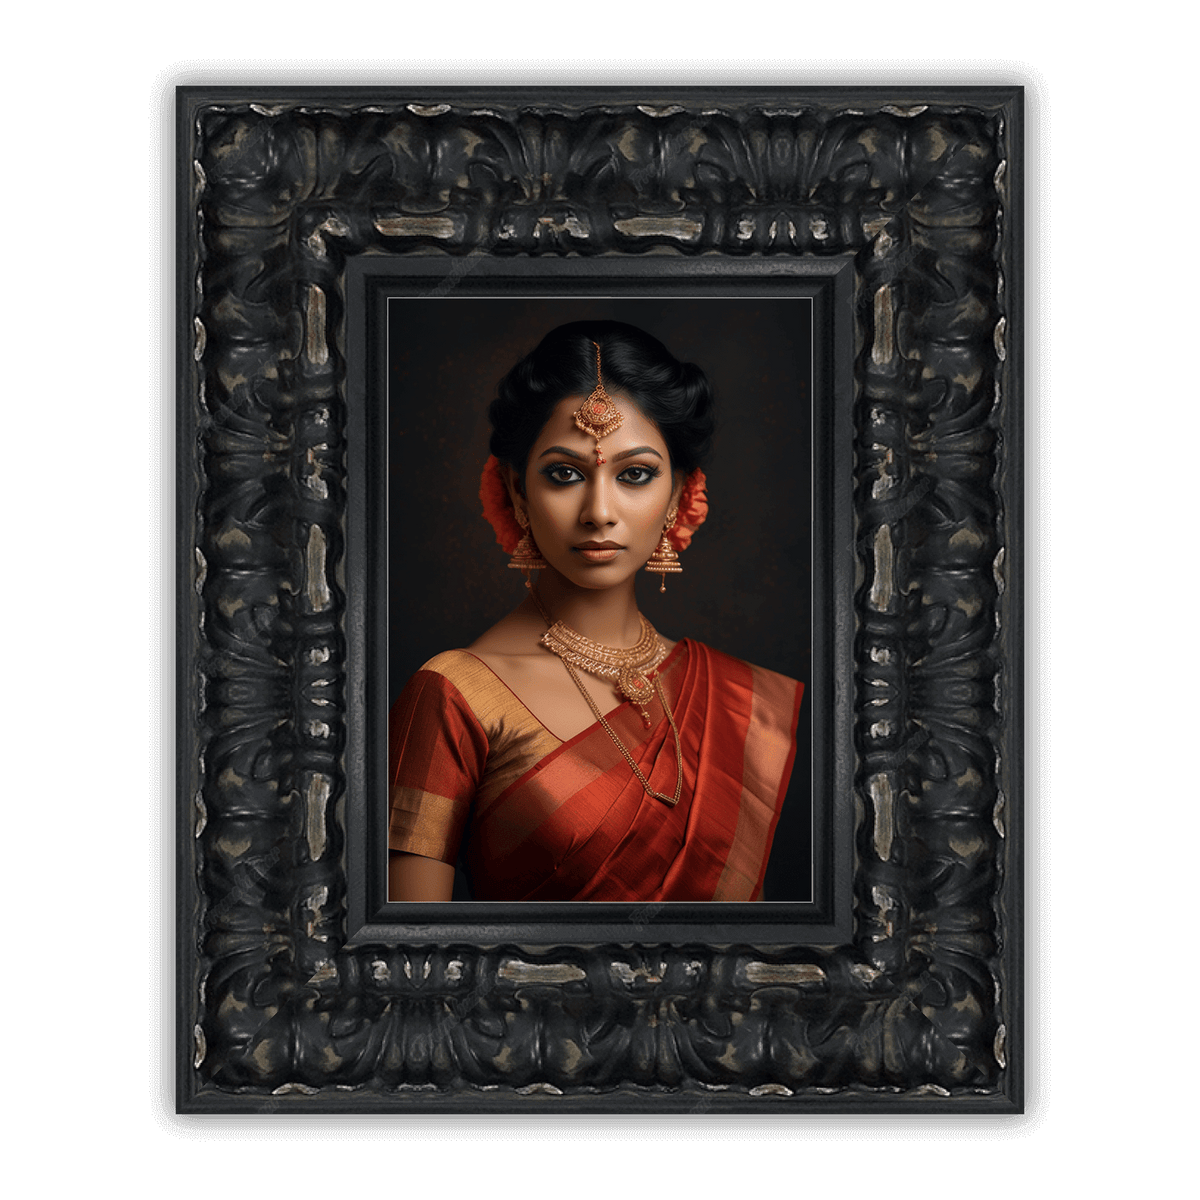 Framebazaar: India's Best Online Photo Printing & Framing Company